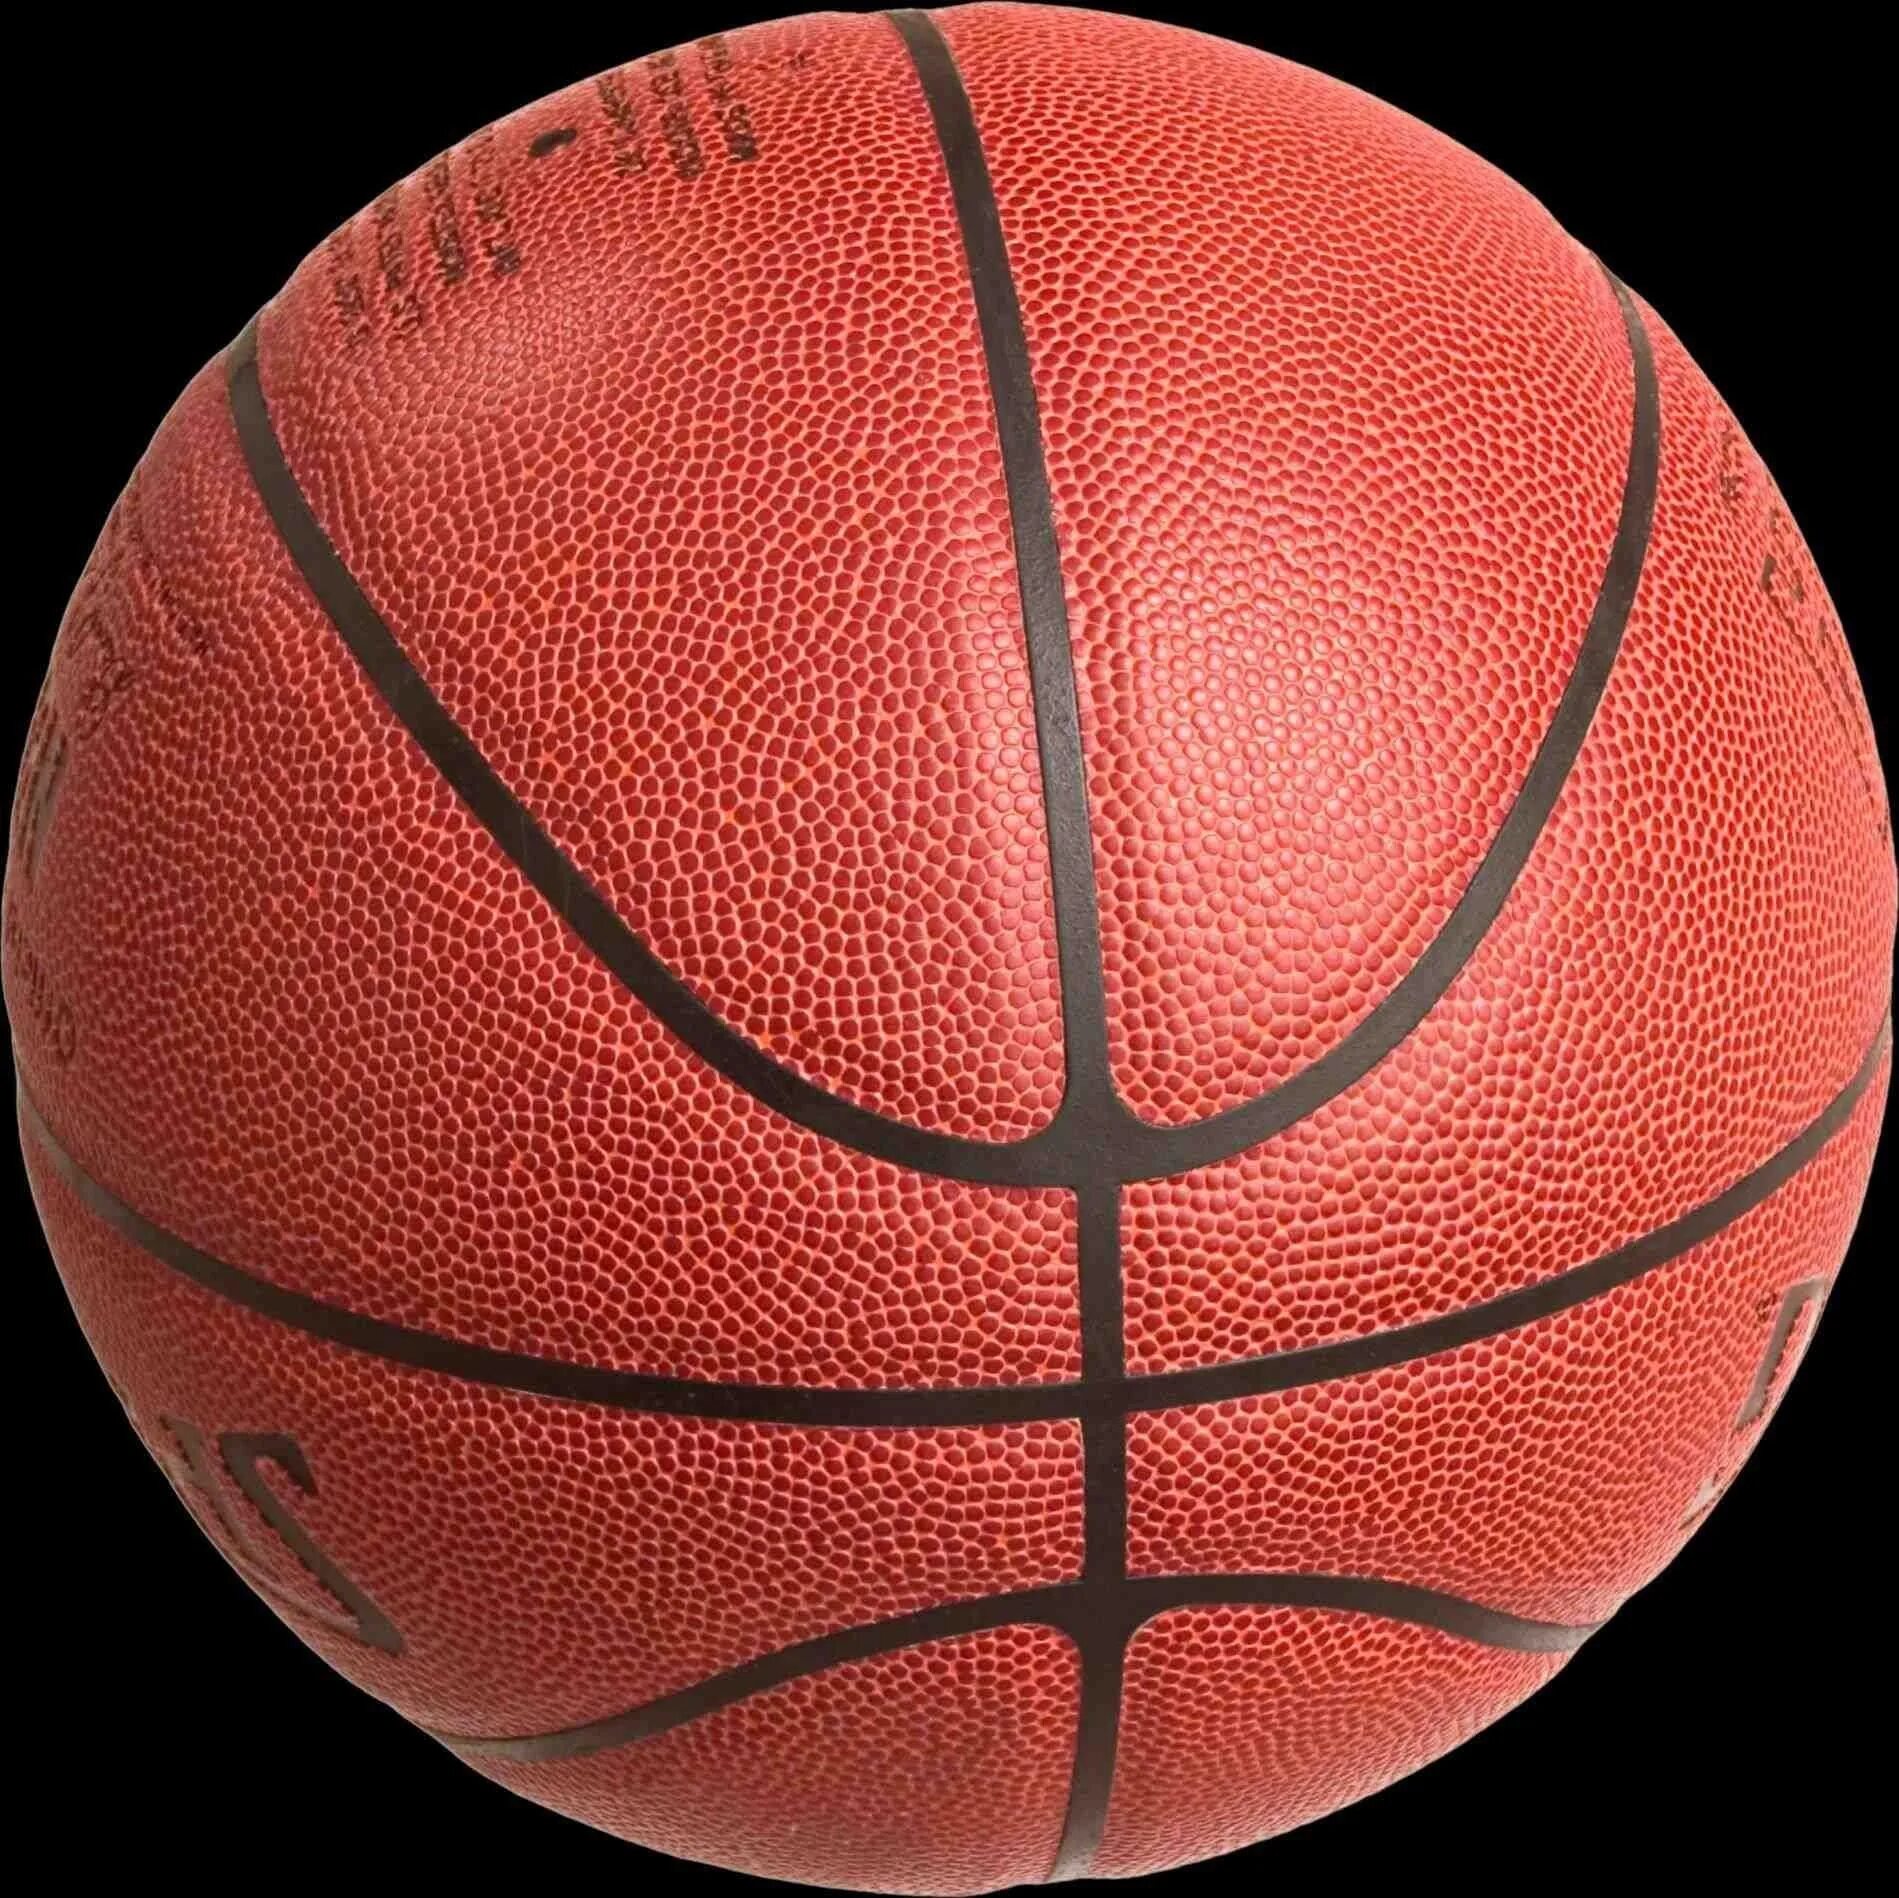 Бол личный. Баскетбольный мяч CS 600. Баскетбольный мяч АСБ. Мяч Spalding баскетбольный 3x3. Мяч АСБ баскетбол.